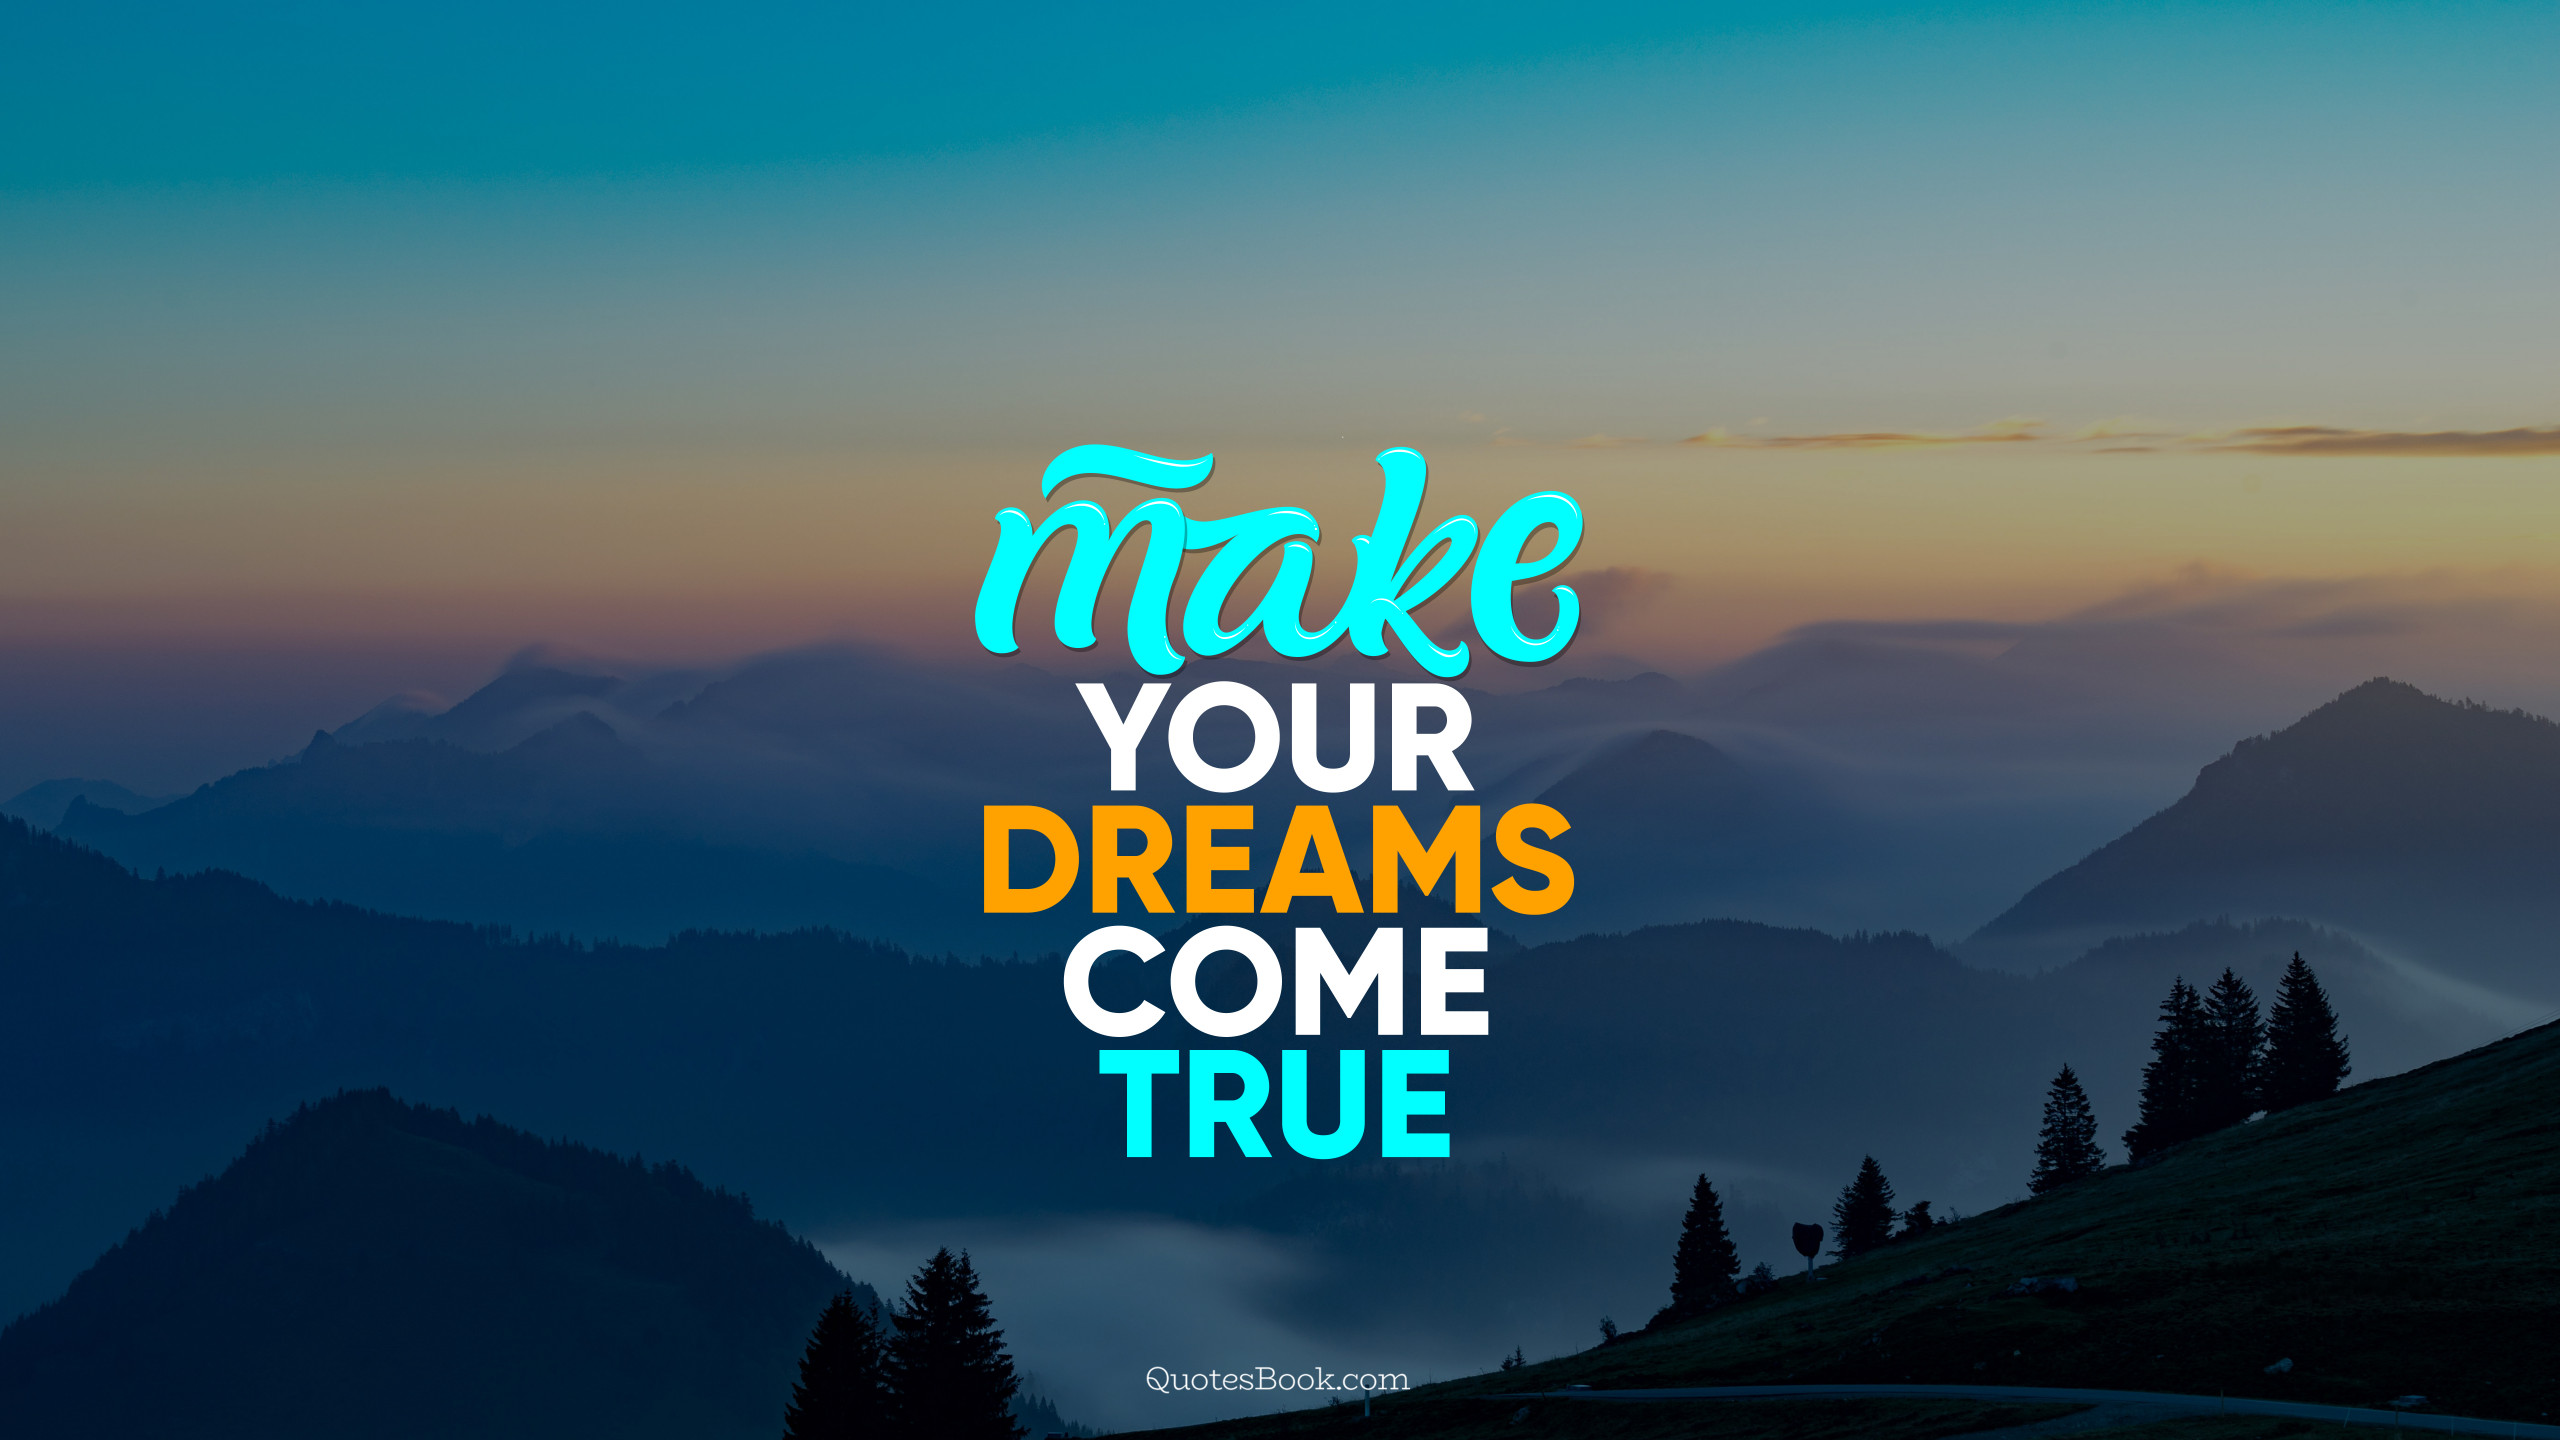 Make your dreams come true - QuotesBook